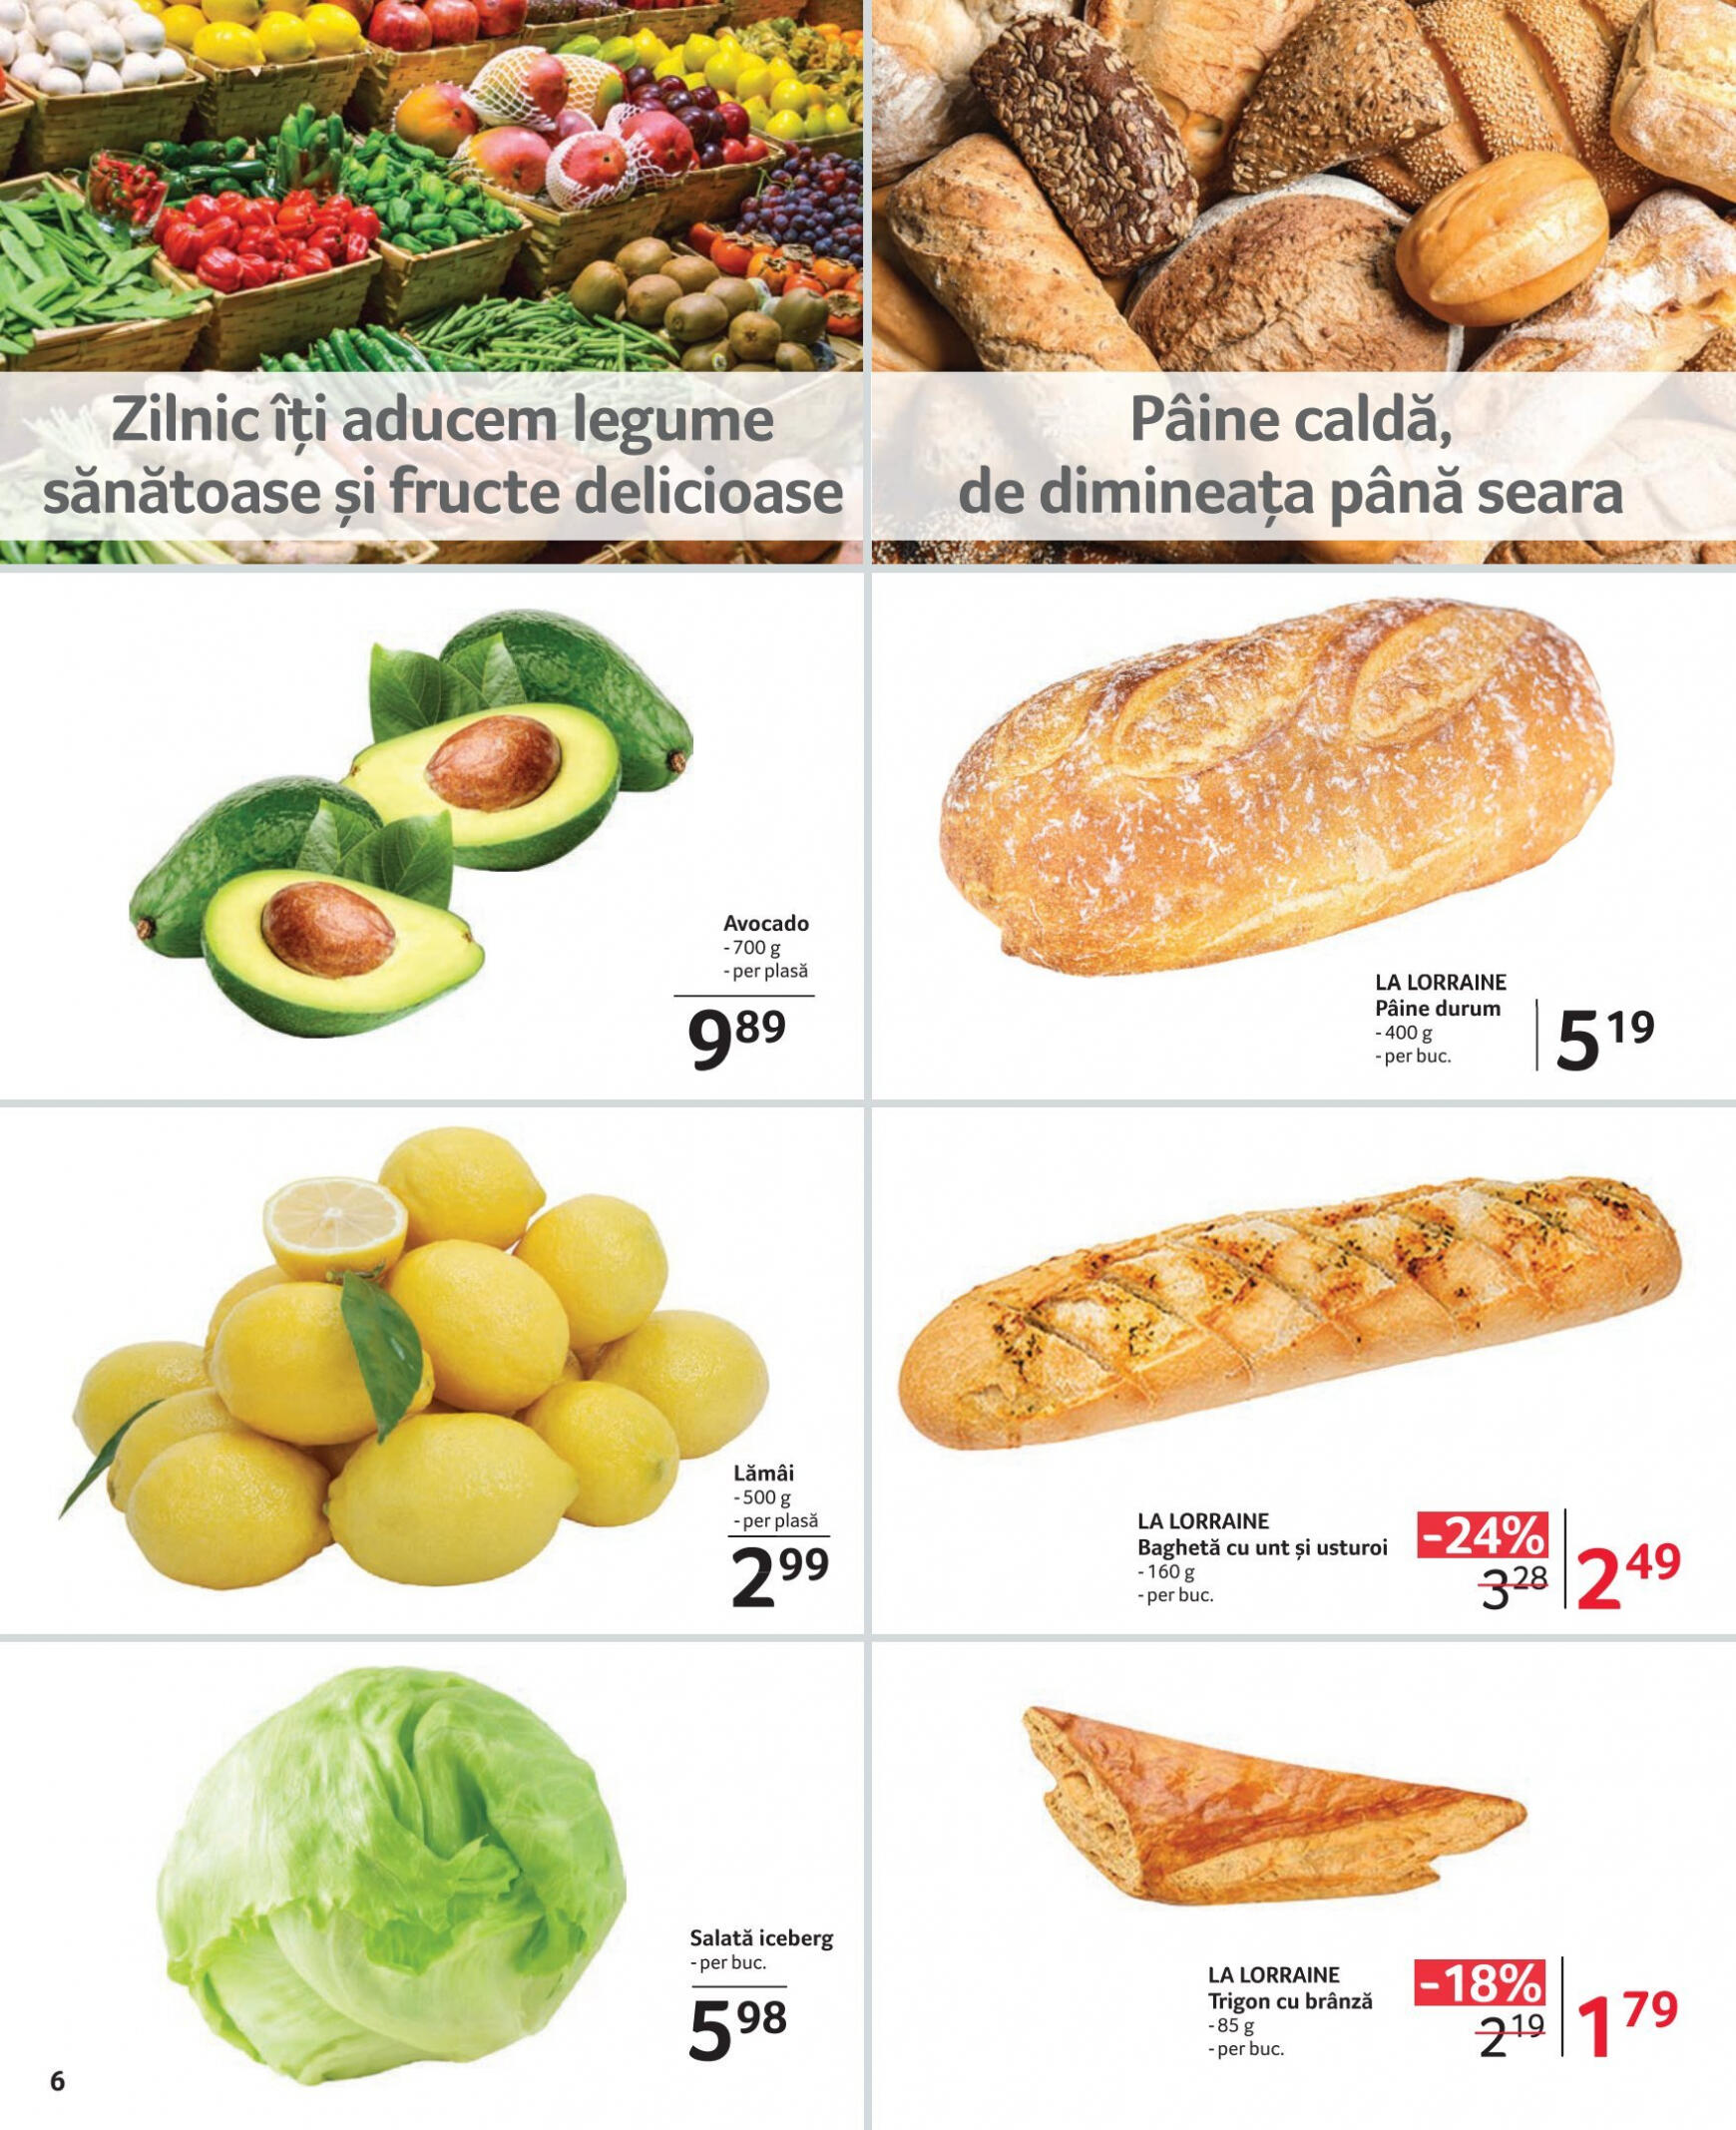 selgros - Catalog nou Selgros - Food & Nonfood 19.04. - 02.05. - page: 6